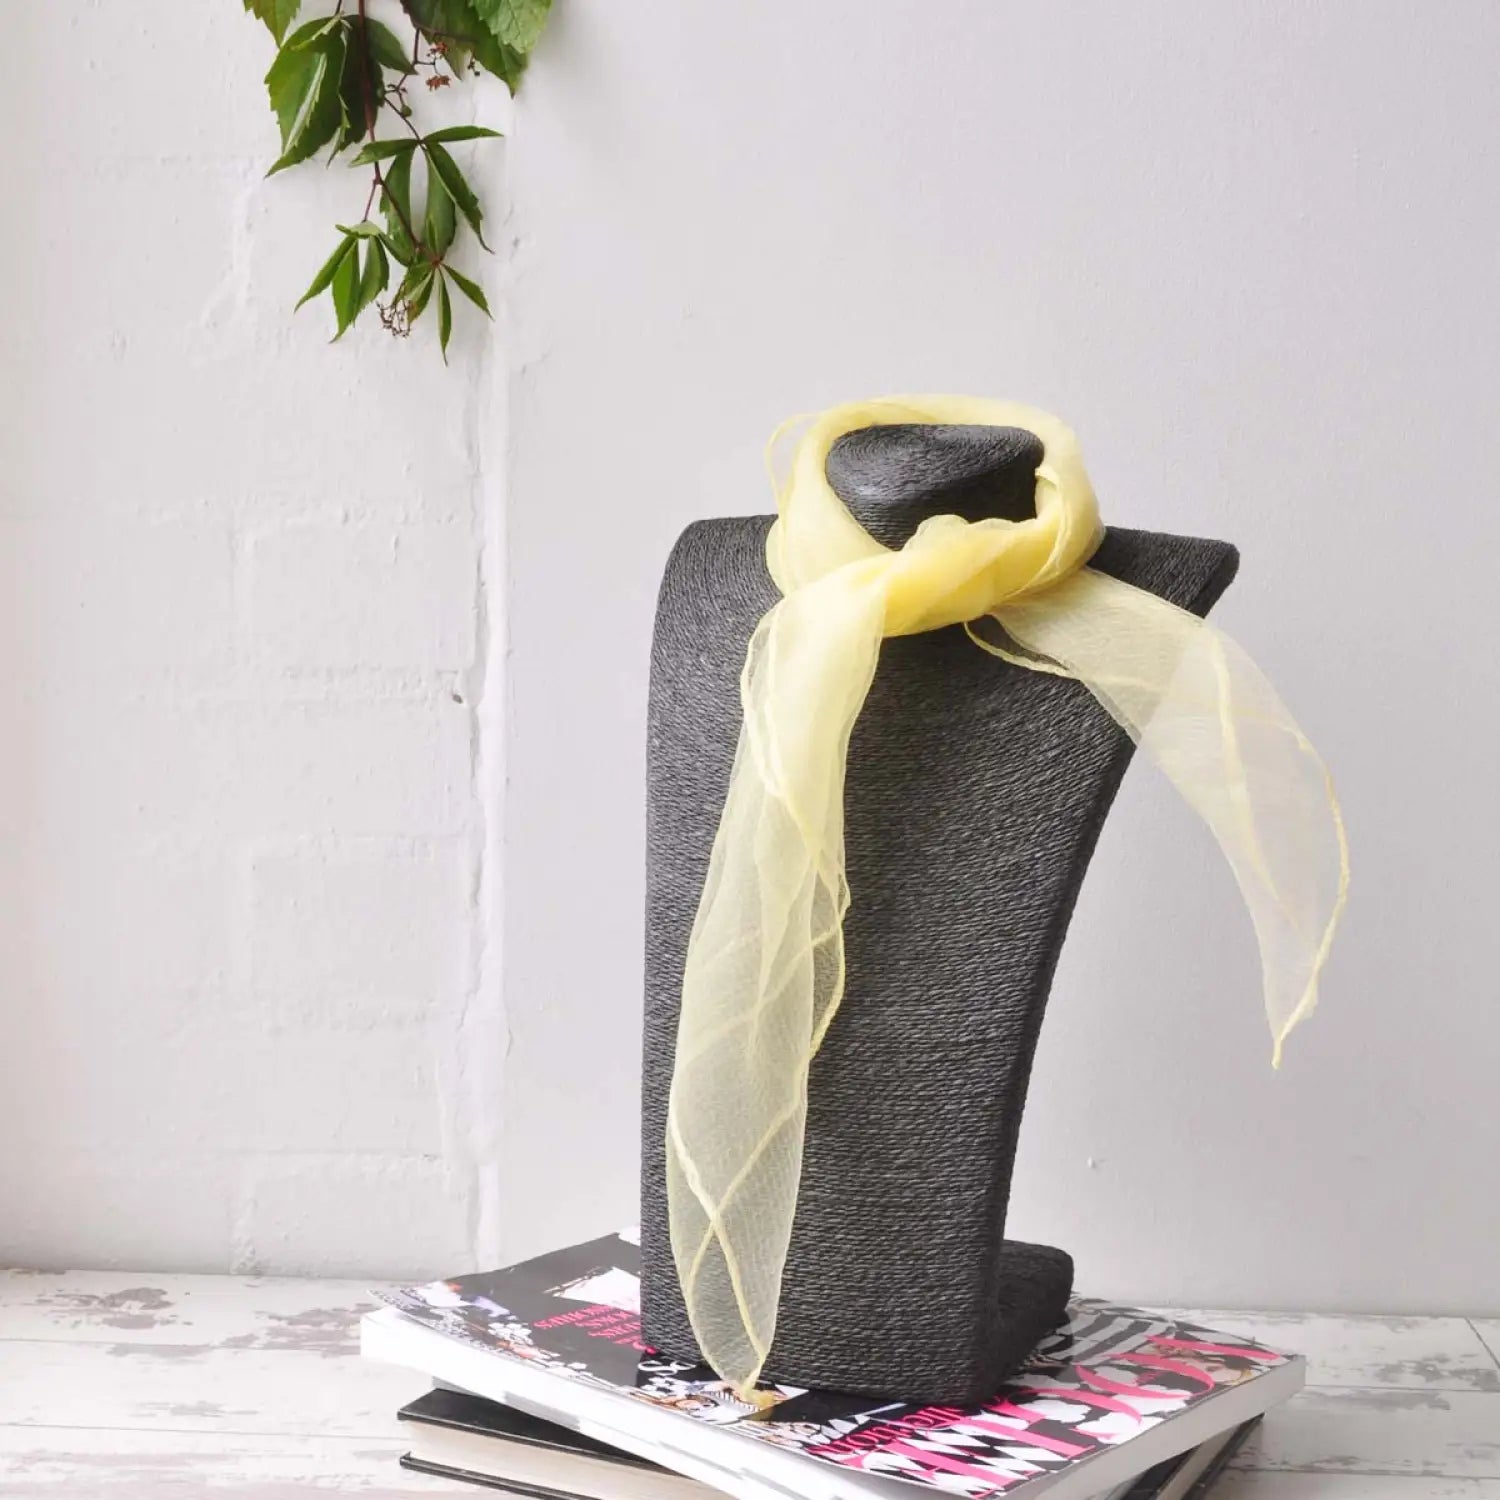 Chiffon square scarf retro organza with black hat and yellow ribbon